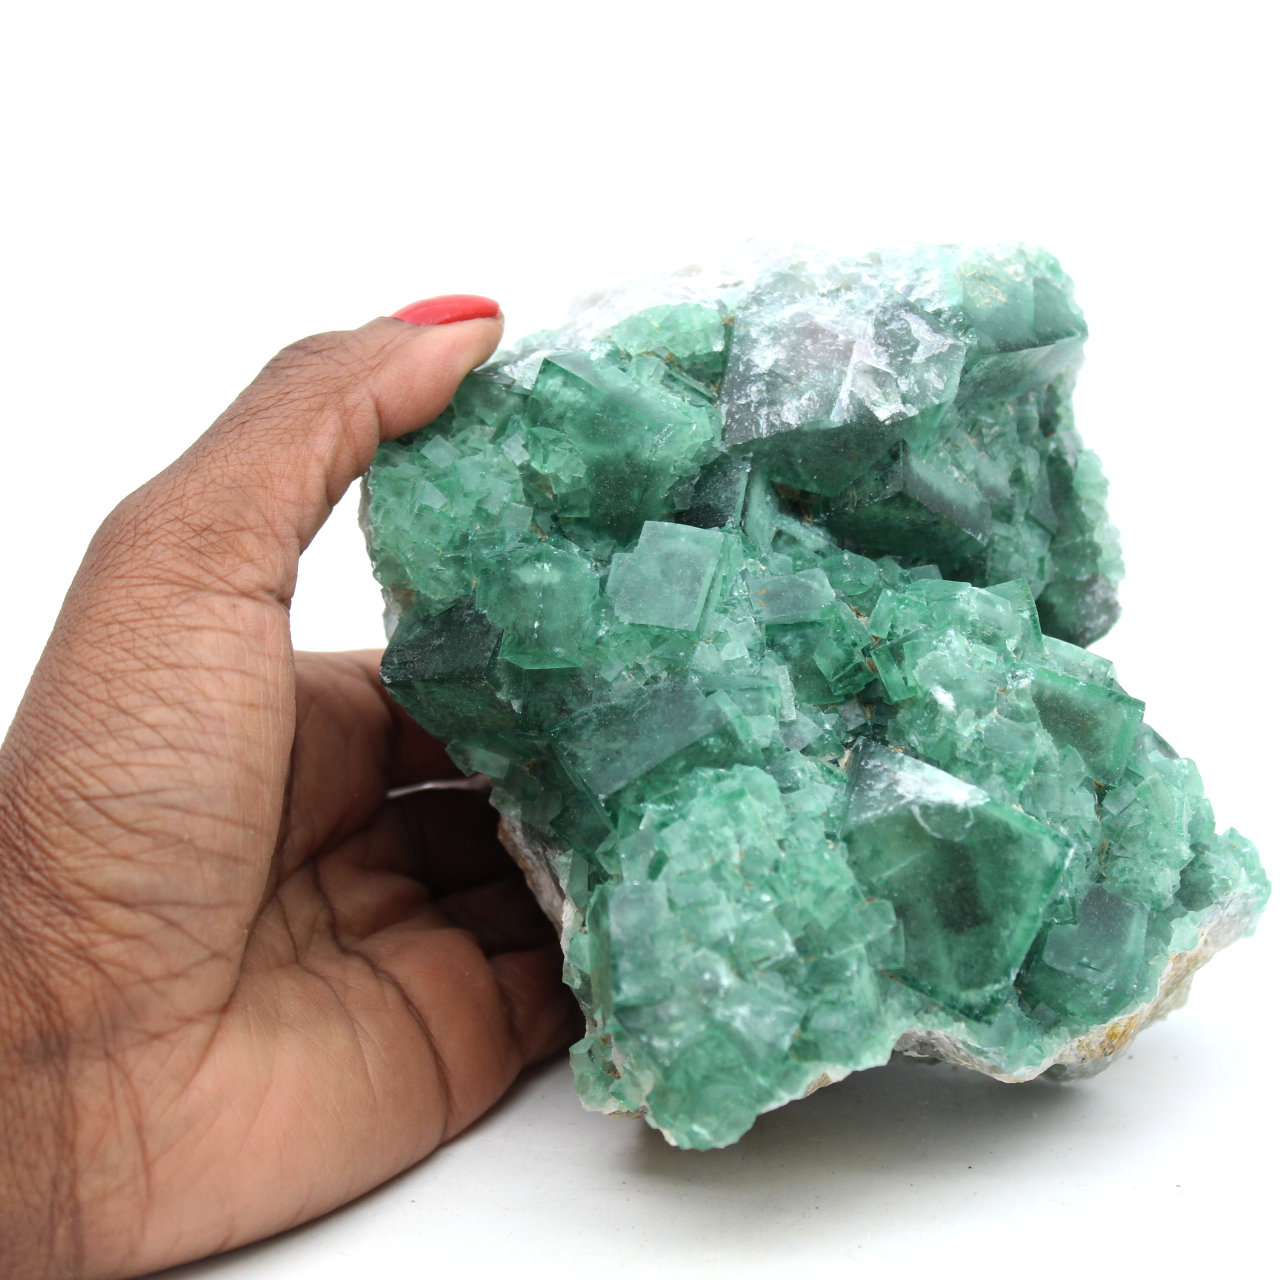 Crystallized natural green fluorite 1.5 kilo